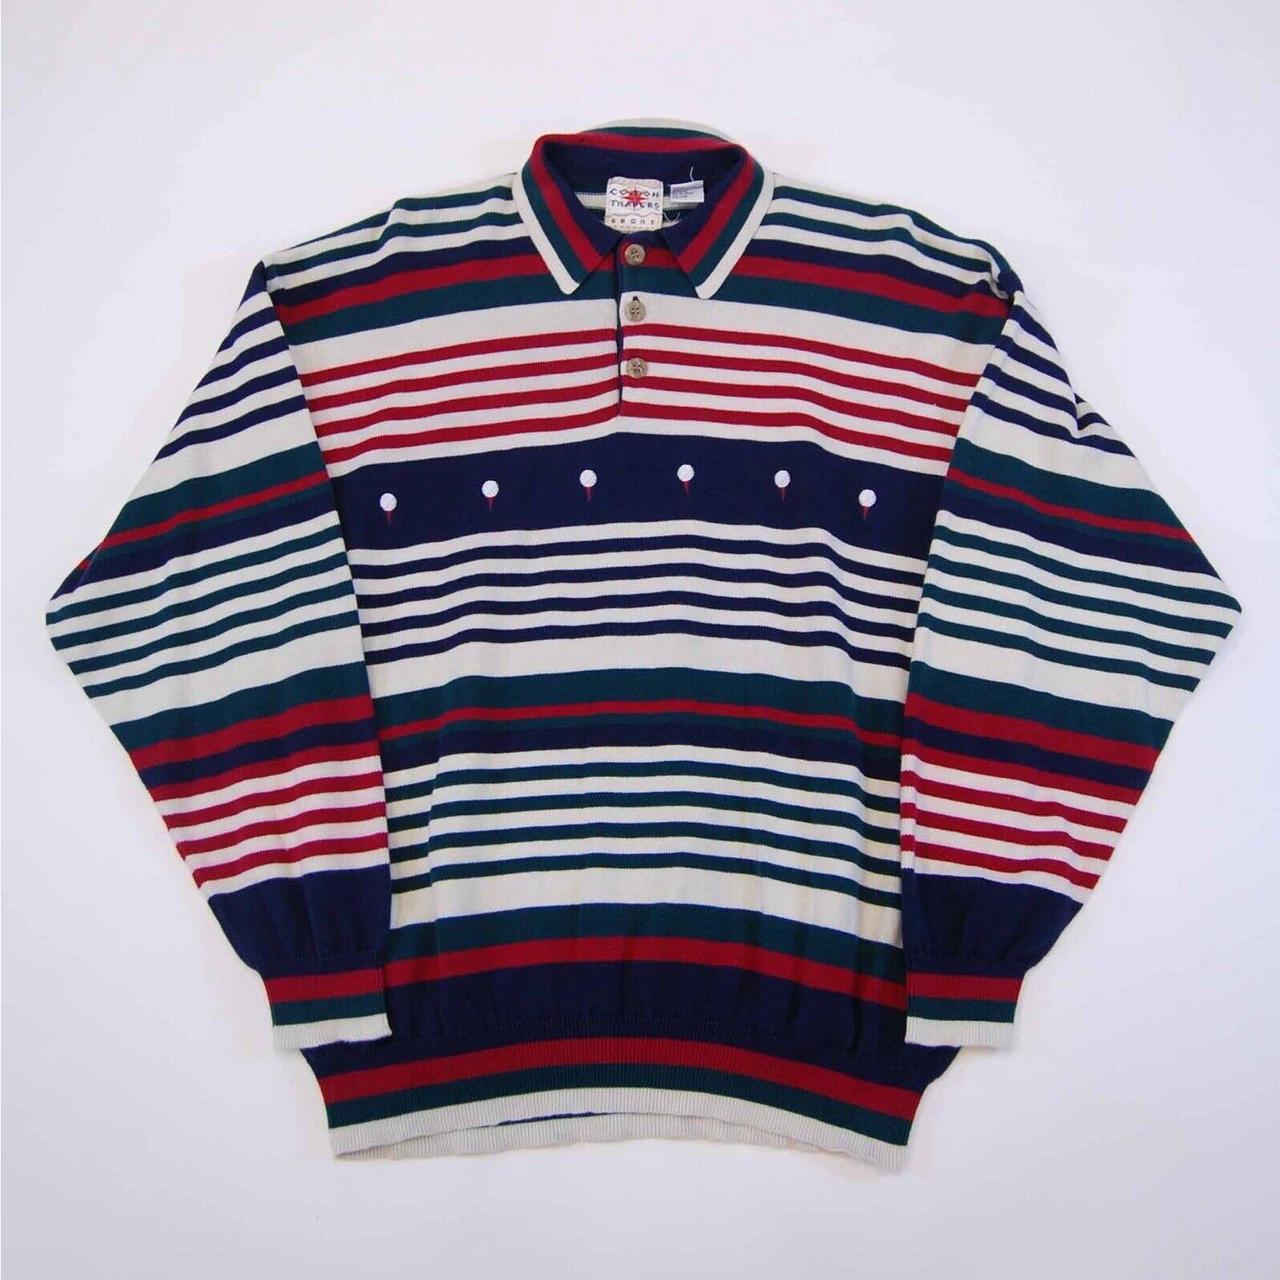 Vintage 1990s Knit Striped Golf Sweater Cotton... - Depop